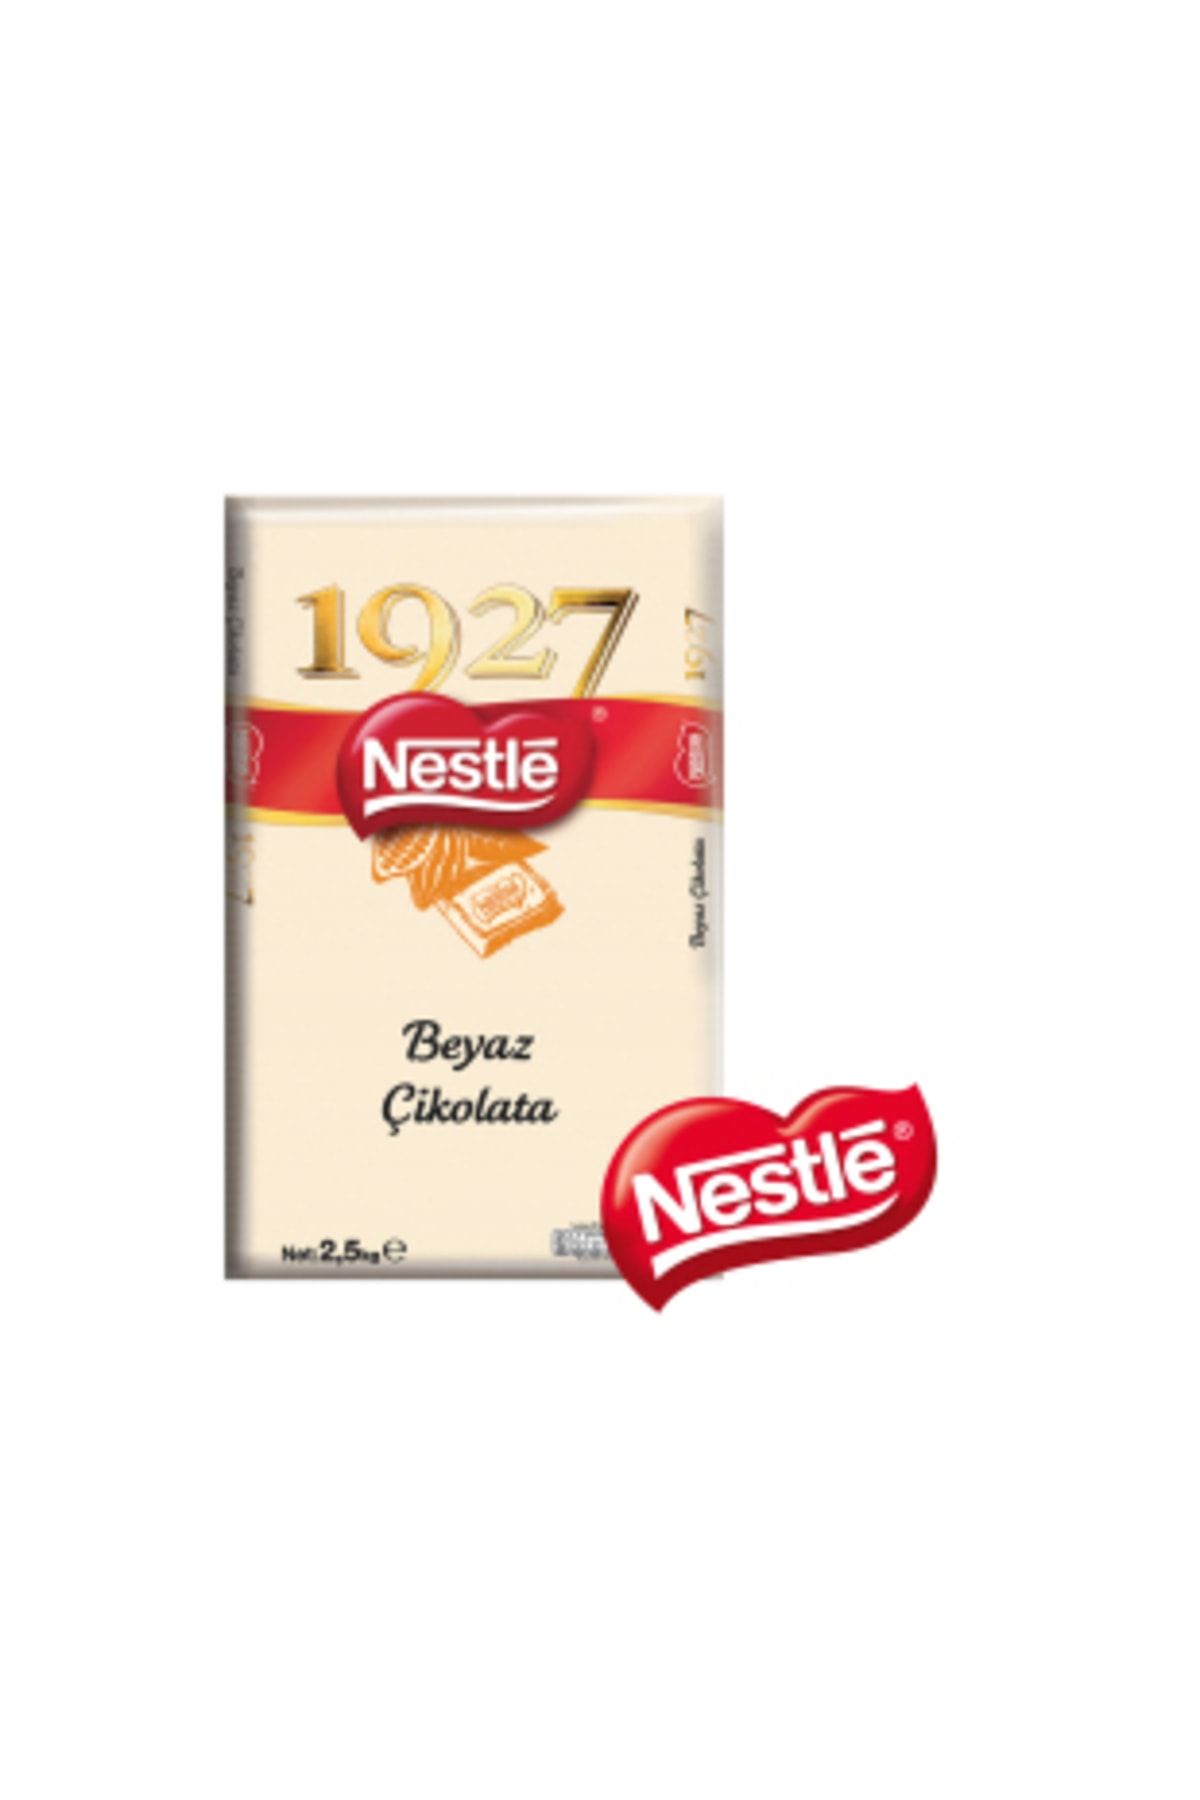 Nestle 1927 Beyaz Kuvertür 2,5kg